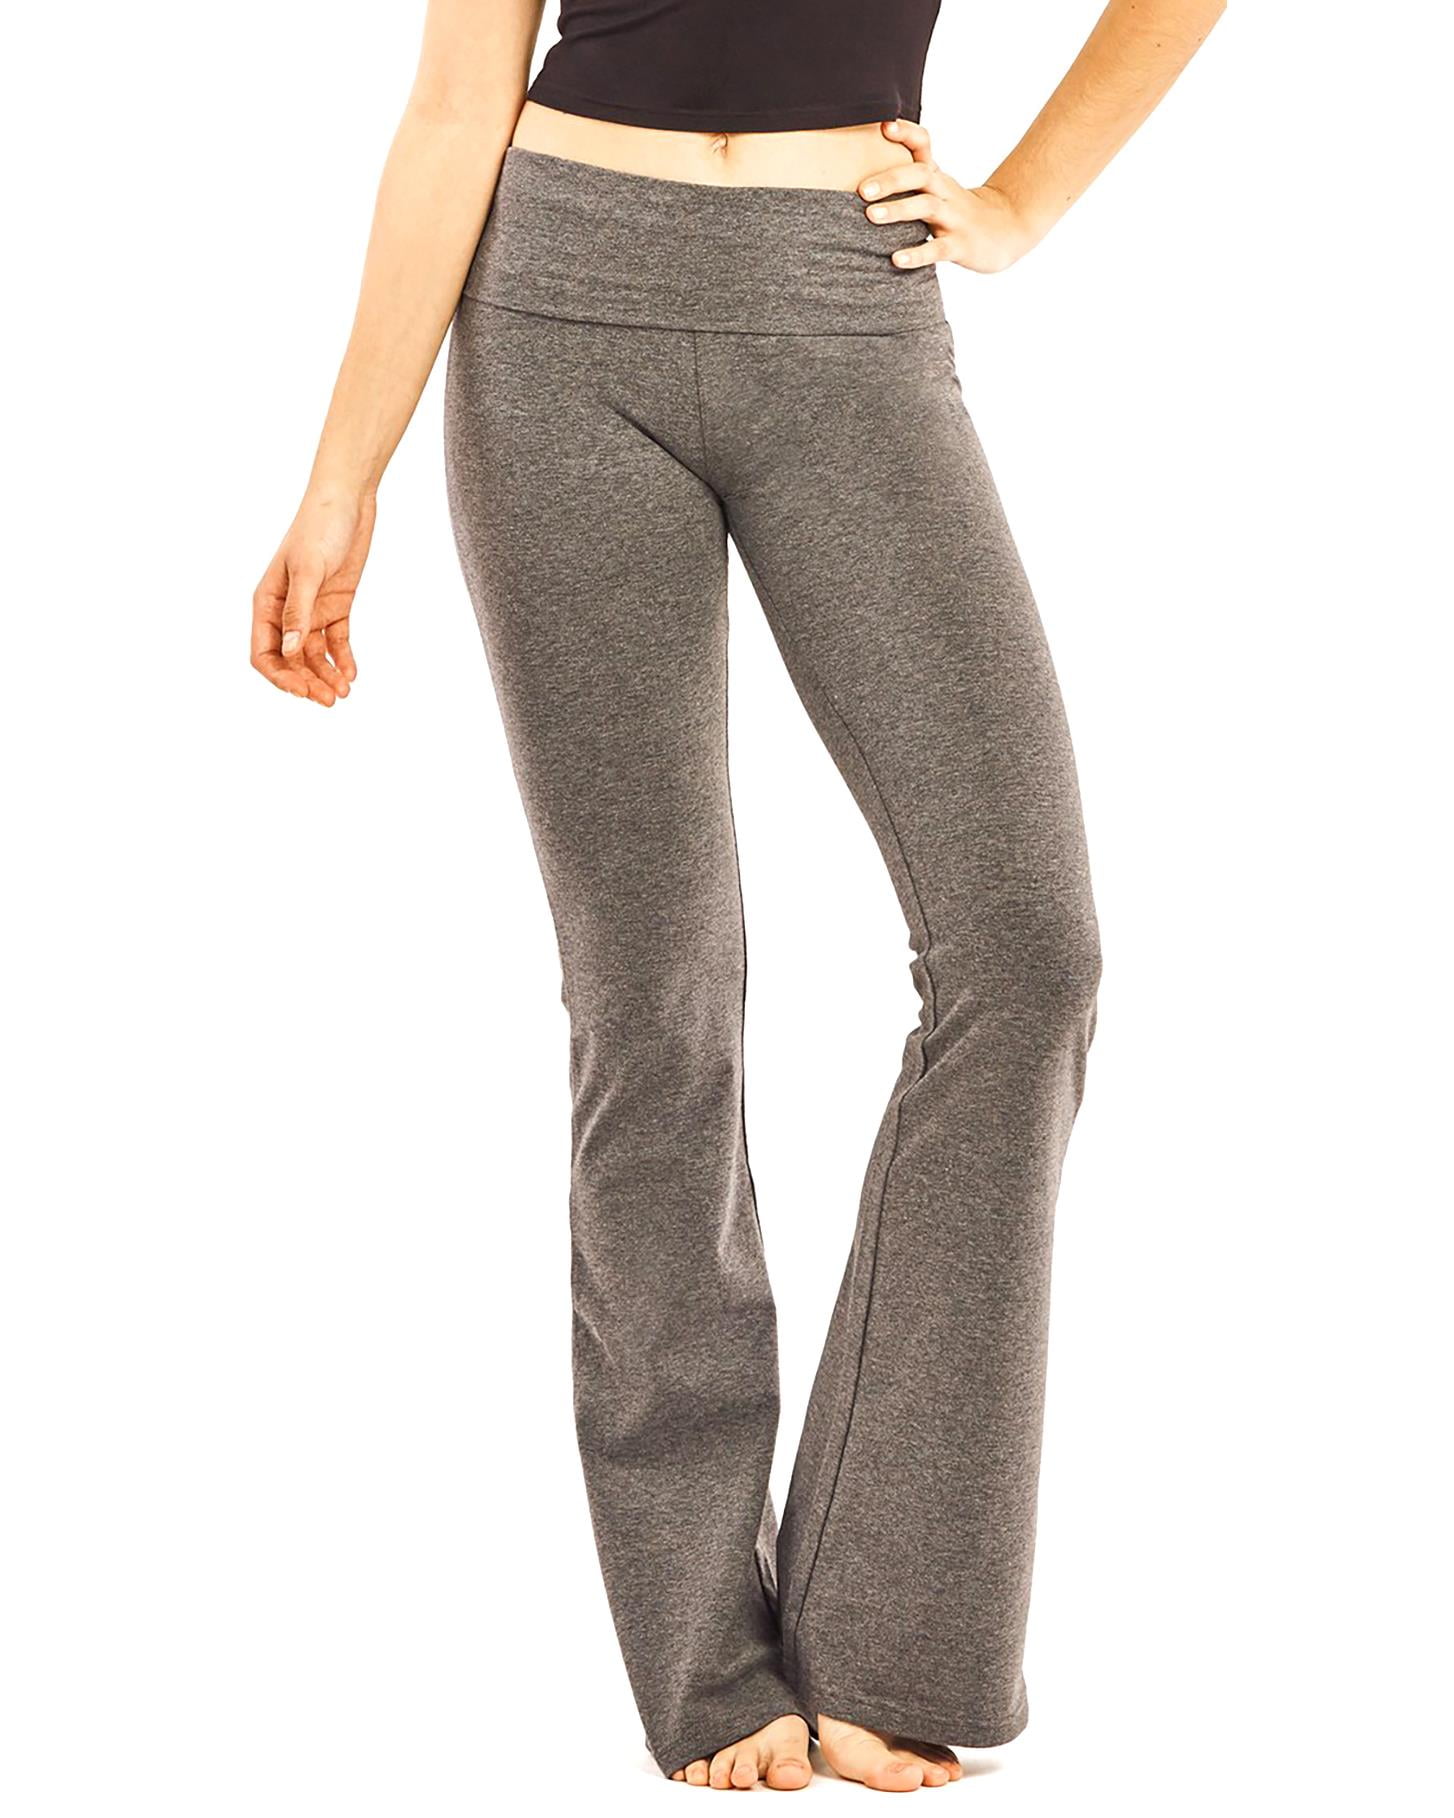 Sofra Ladies Yoga Pants Womens Sweatpants Active Wear, Gray, Size ...